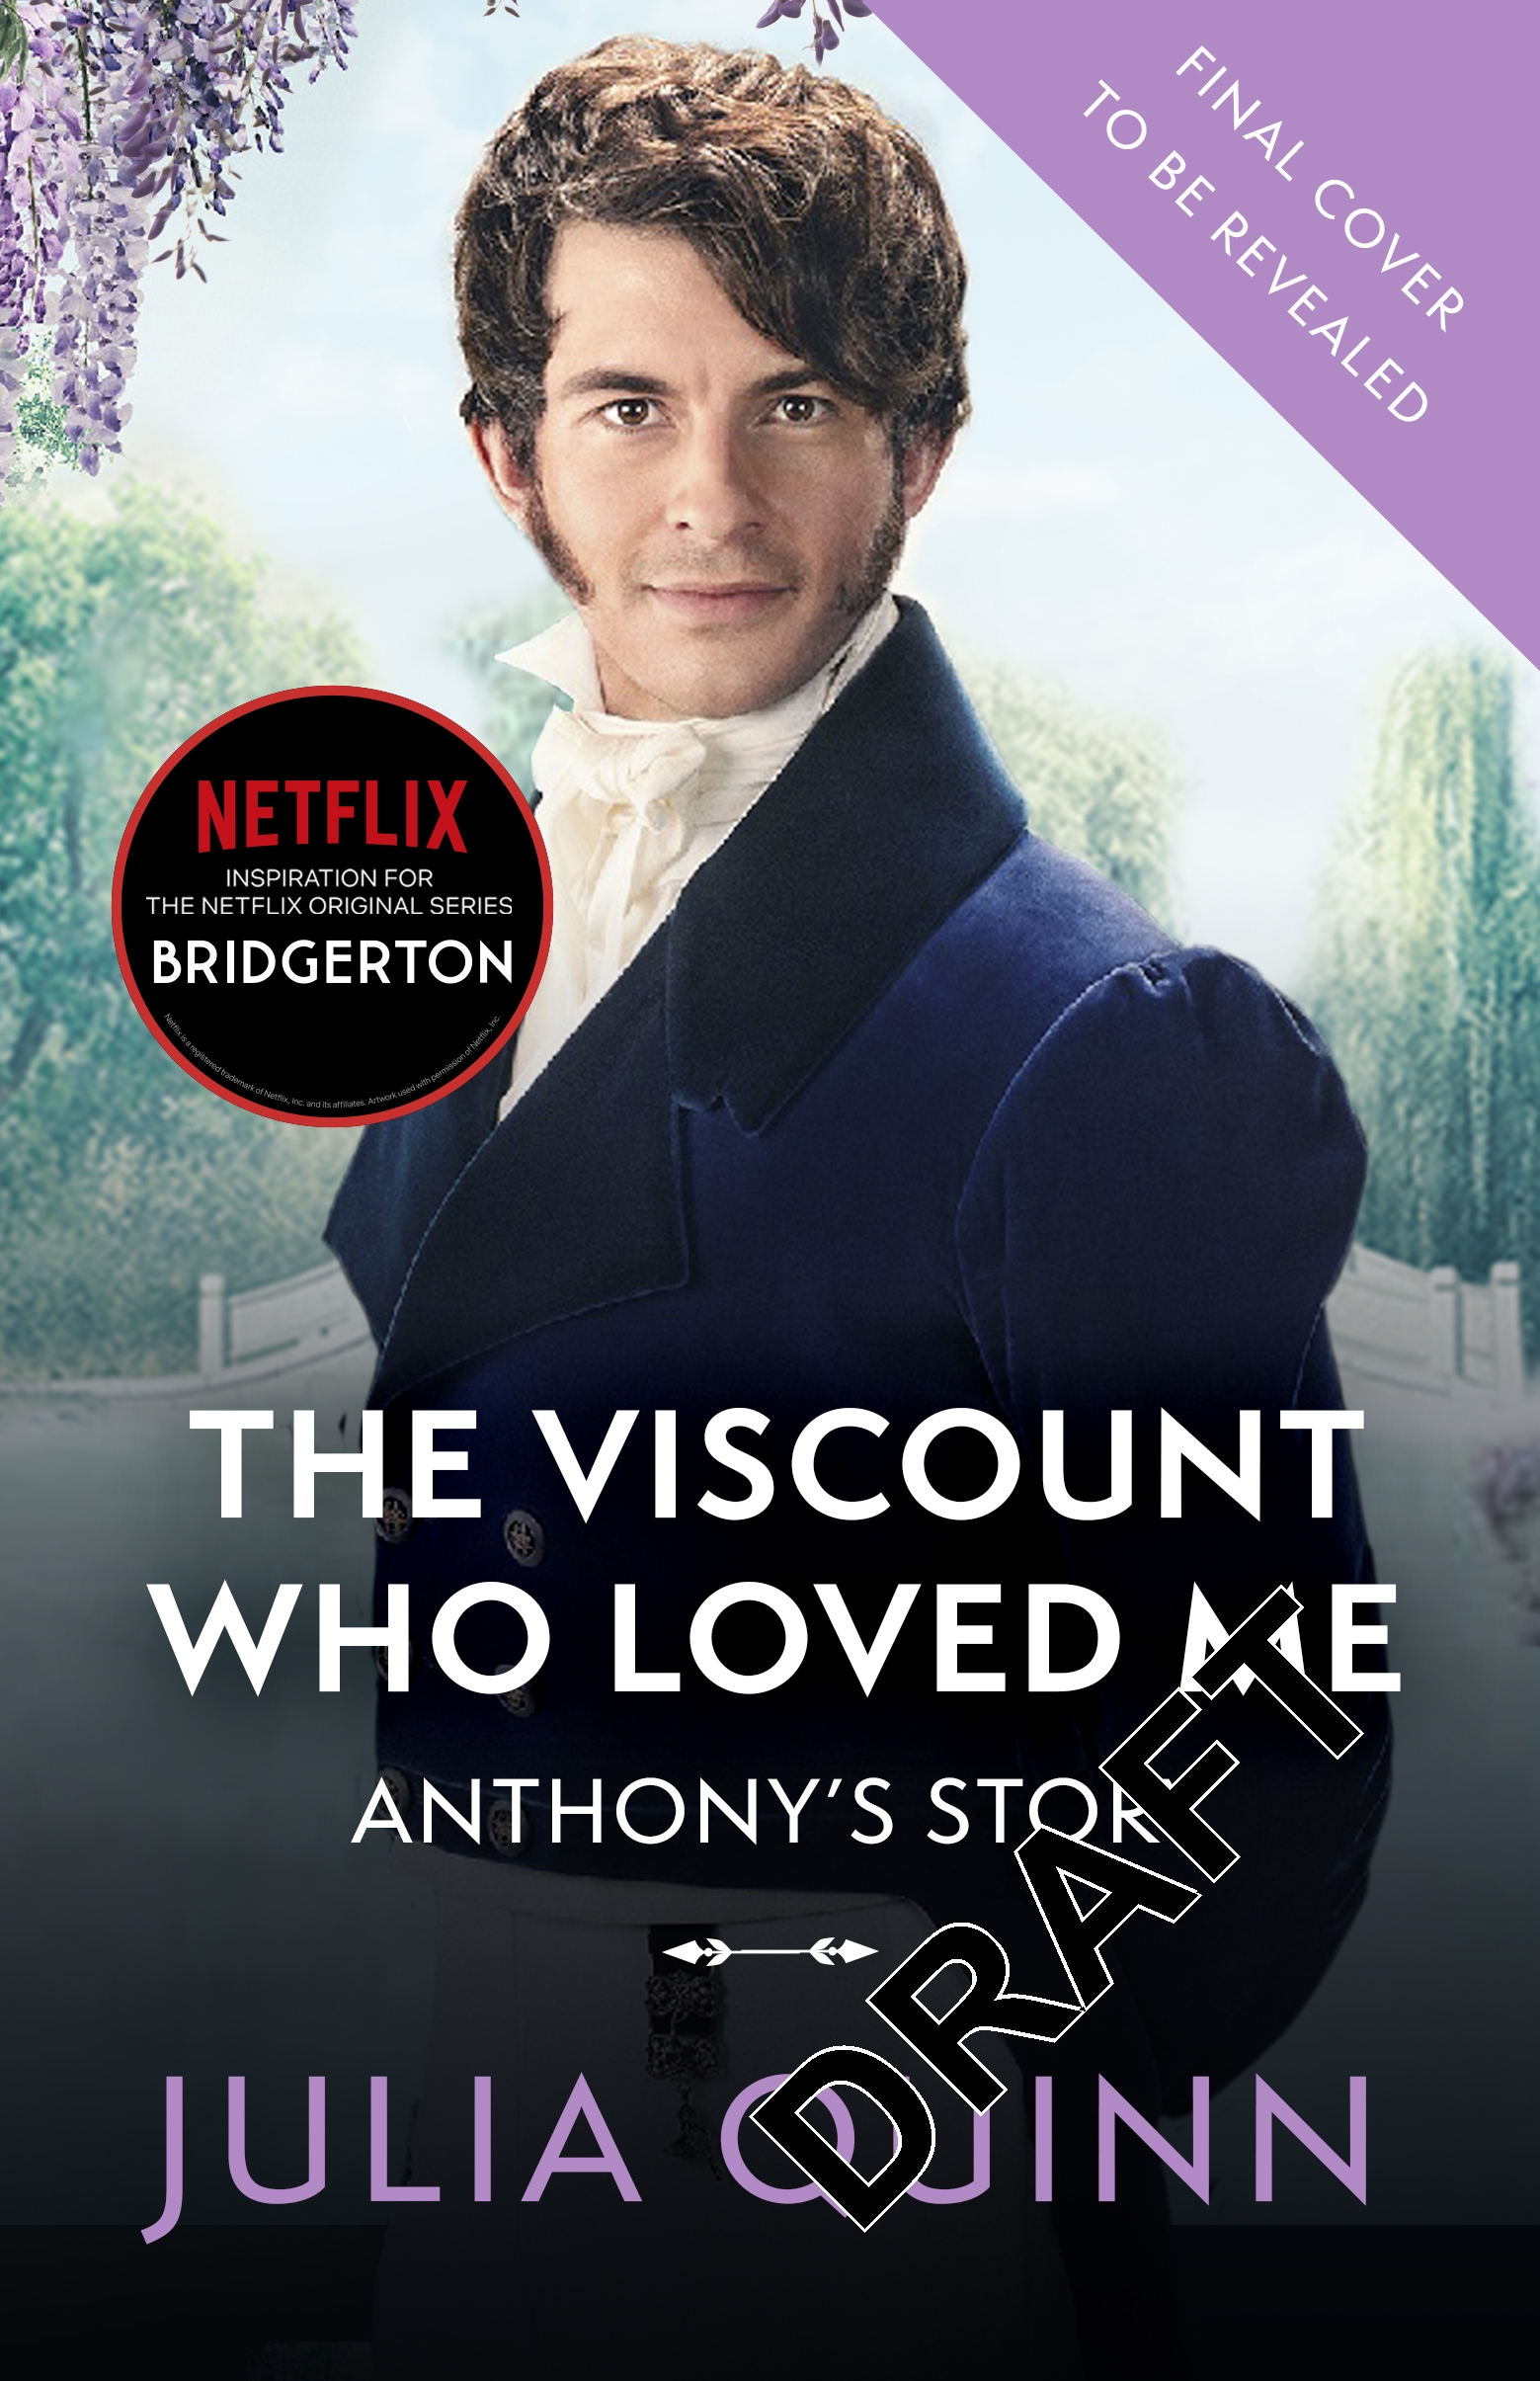 Bridgerton: The Viscount Who Loved Me (Bridgertons Book 2) : The Sunday Times bestselling inspiration for the Netflix Original Series Bridgerton